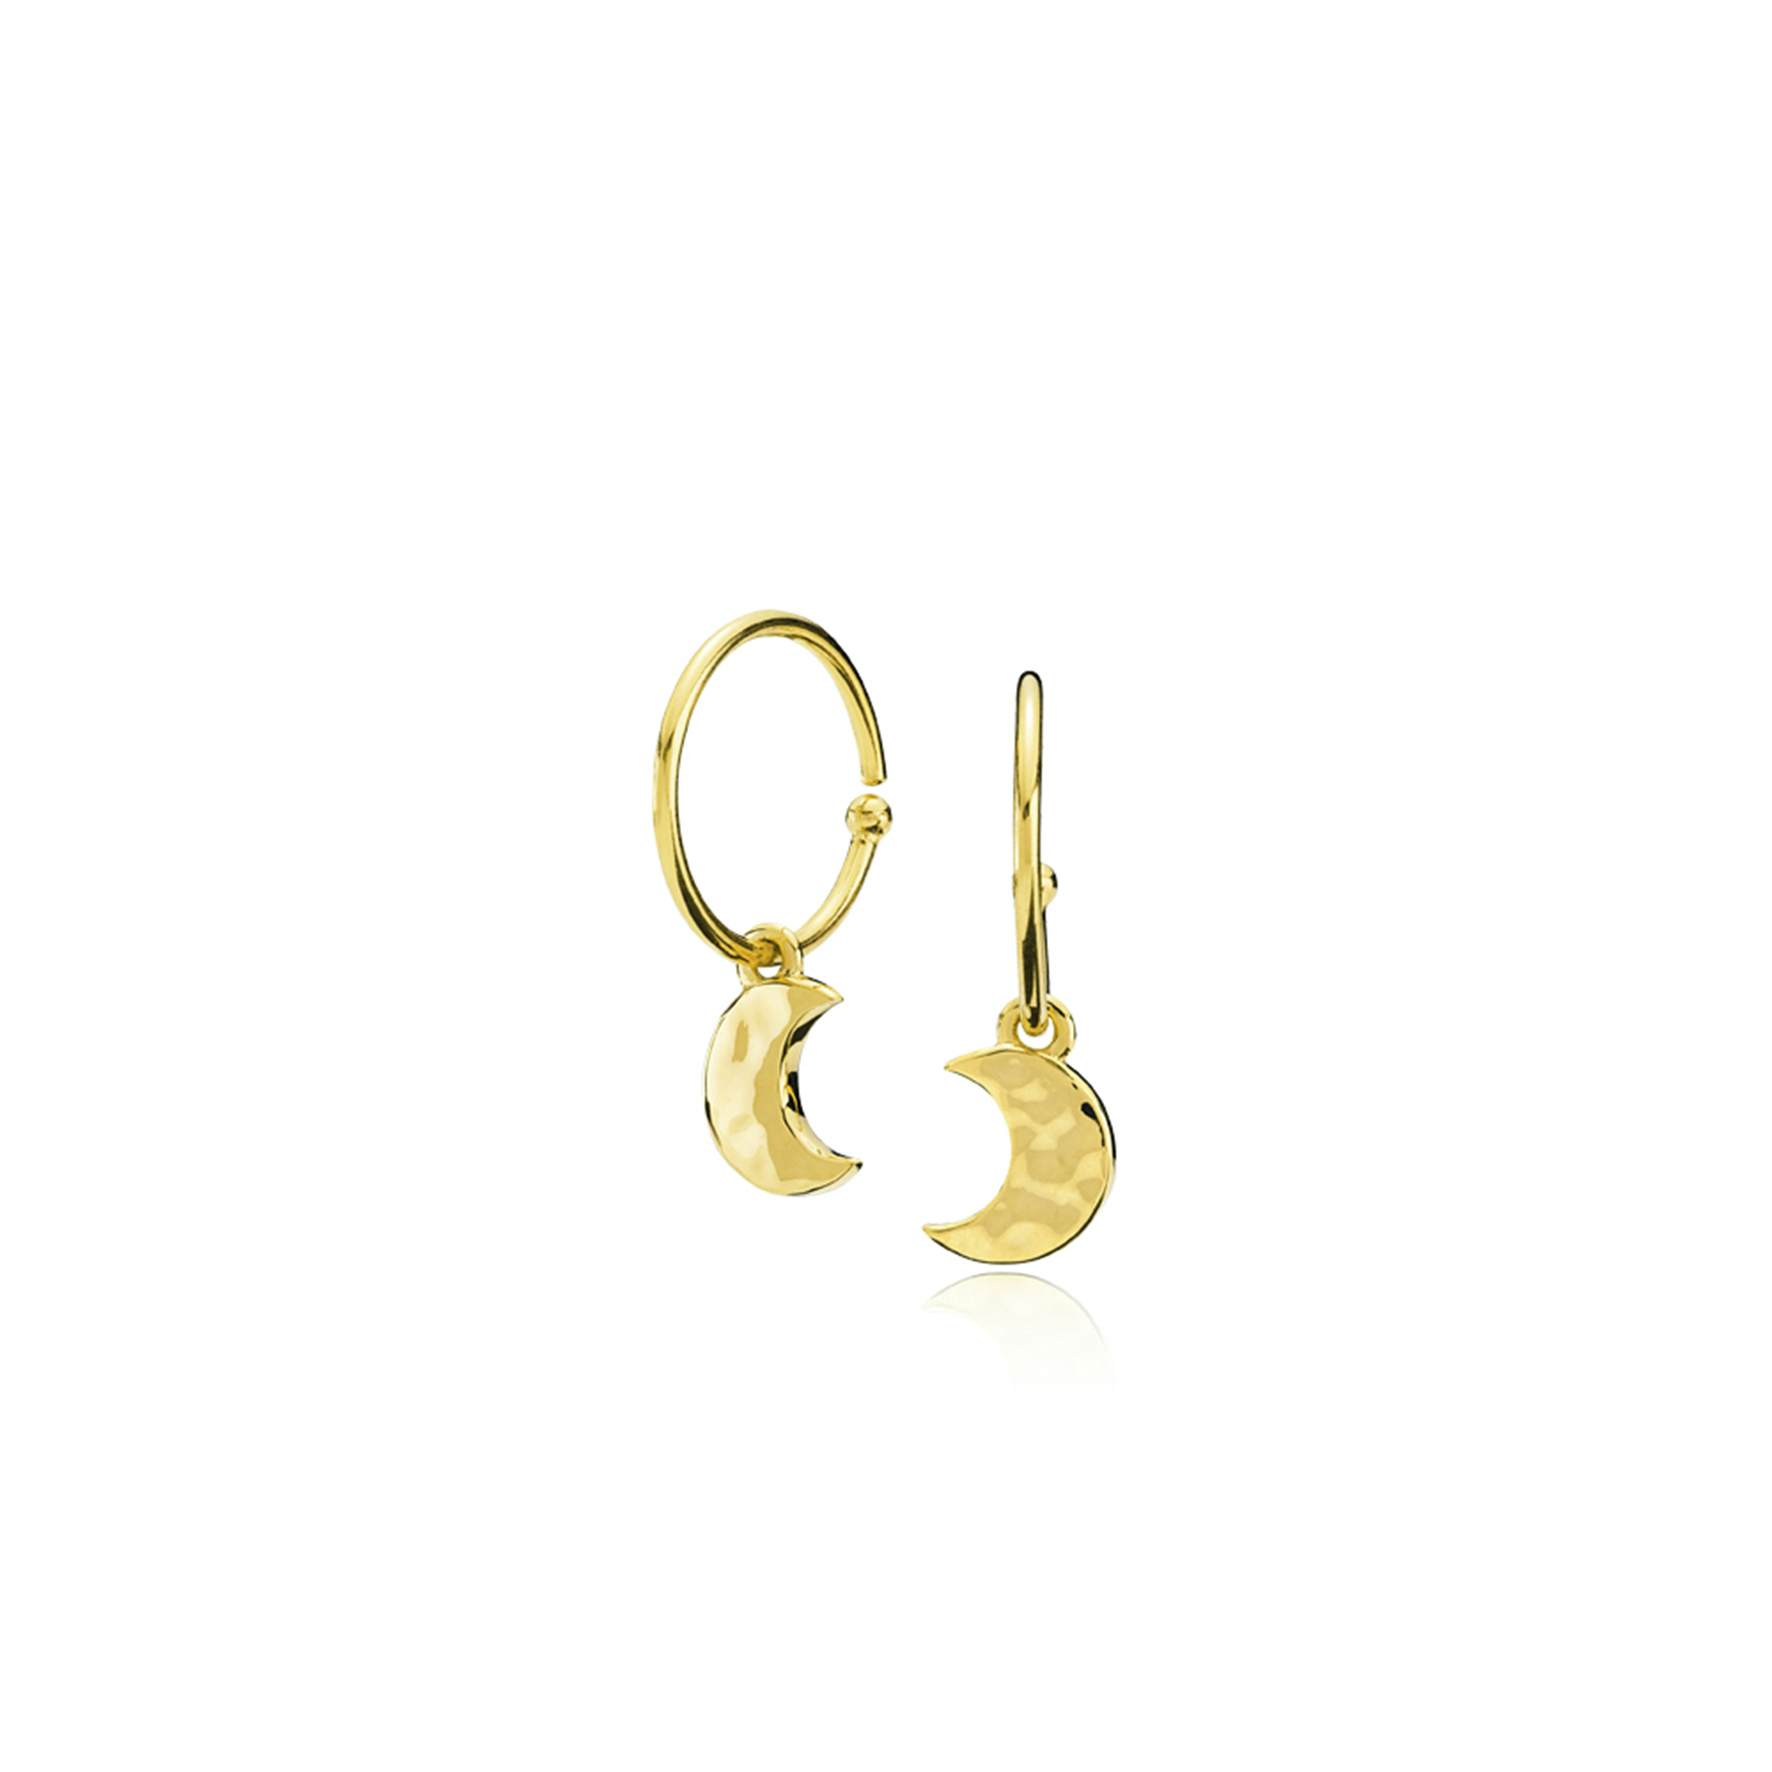 Bella Dream By Sistie Earrings von Sistie in Vergoldet-Silber Sterling 925